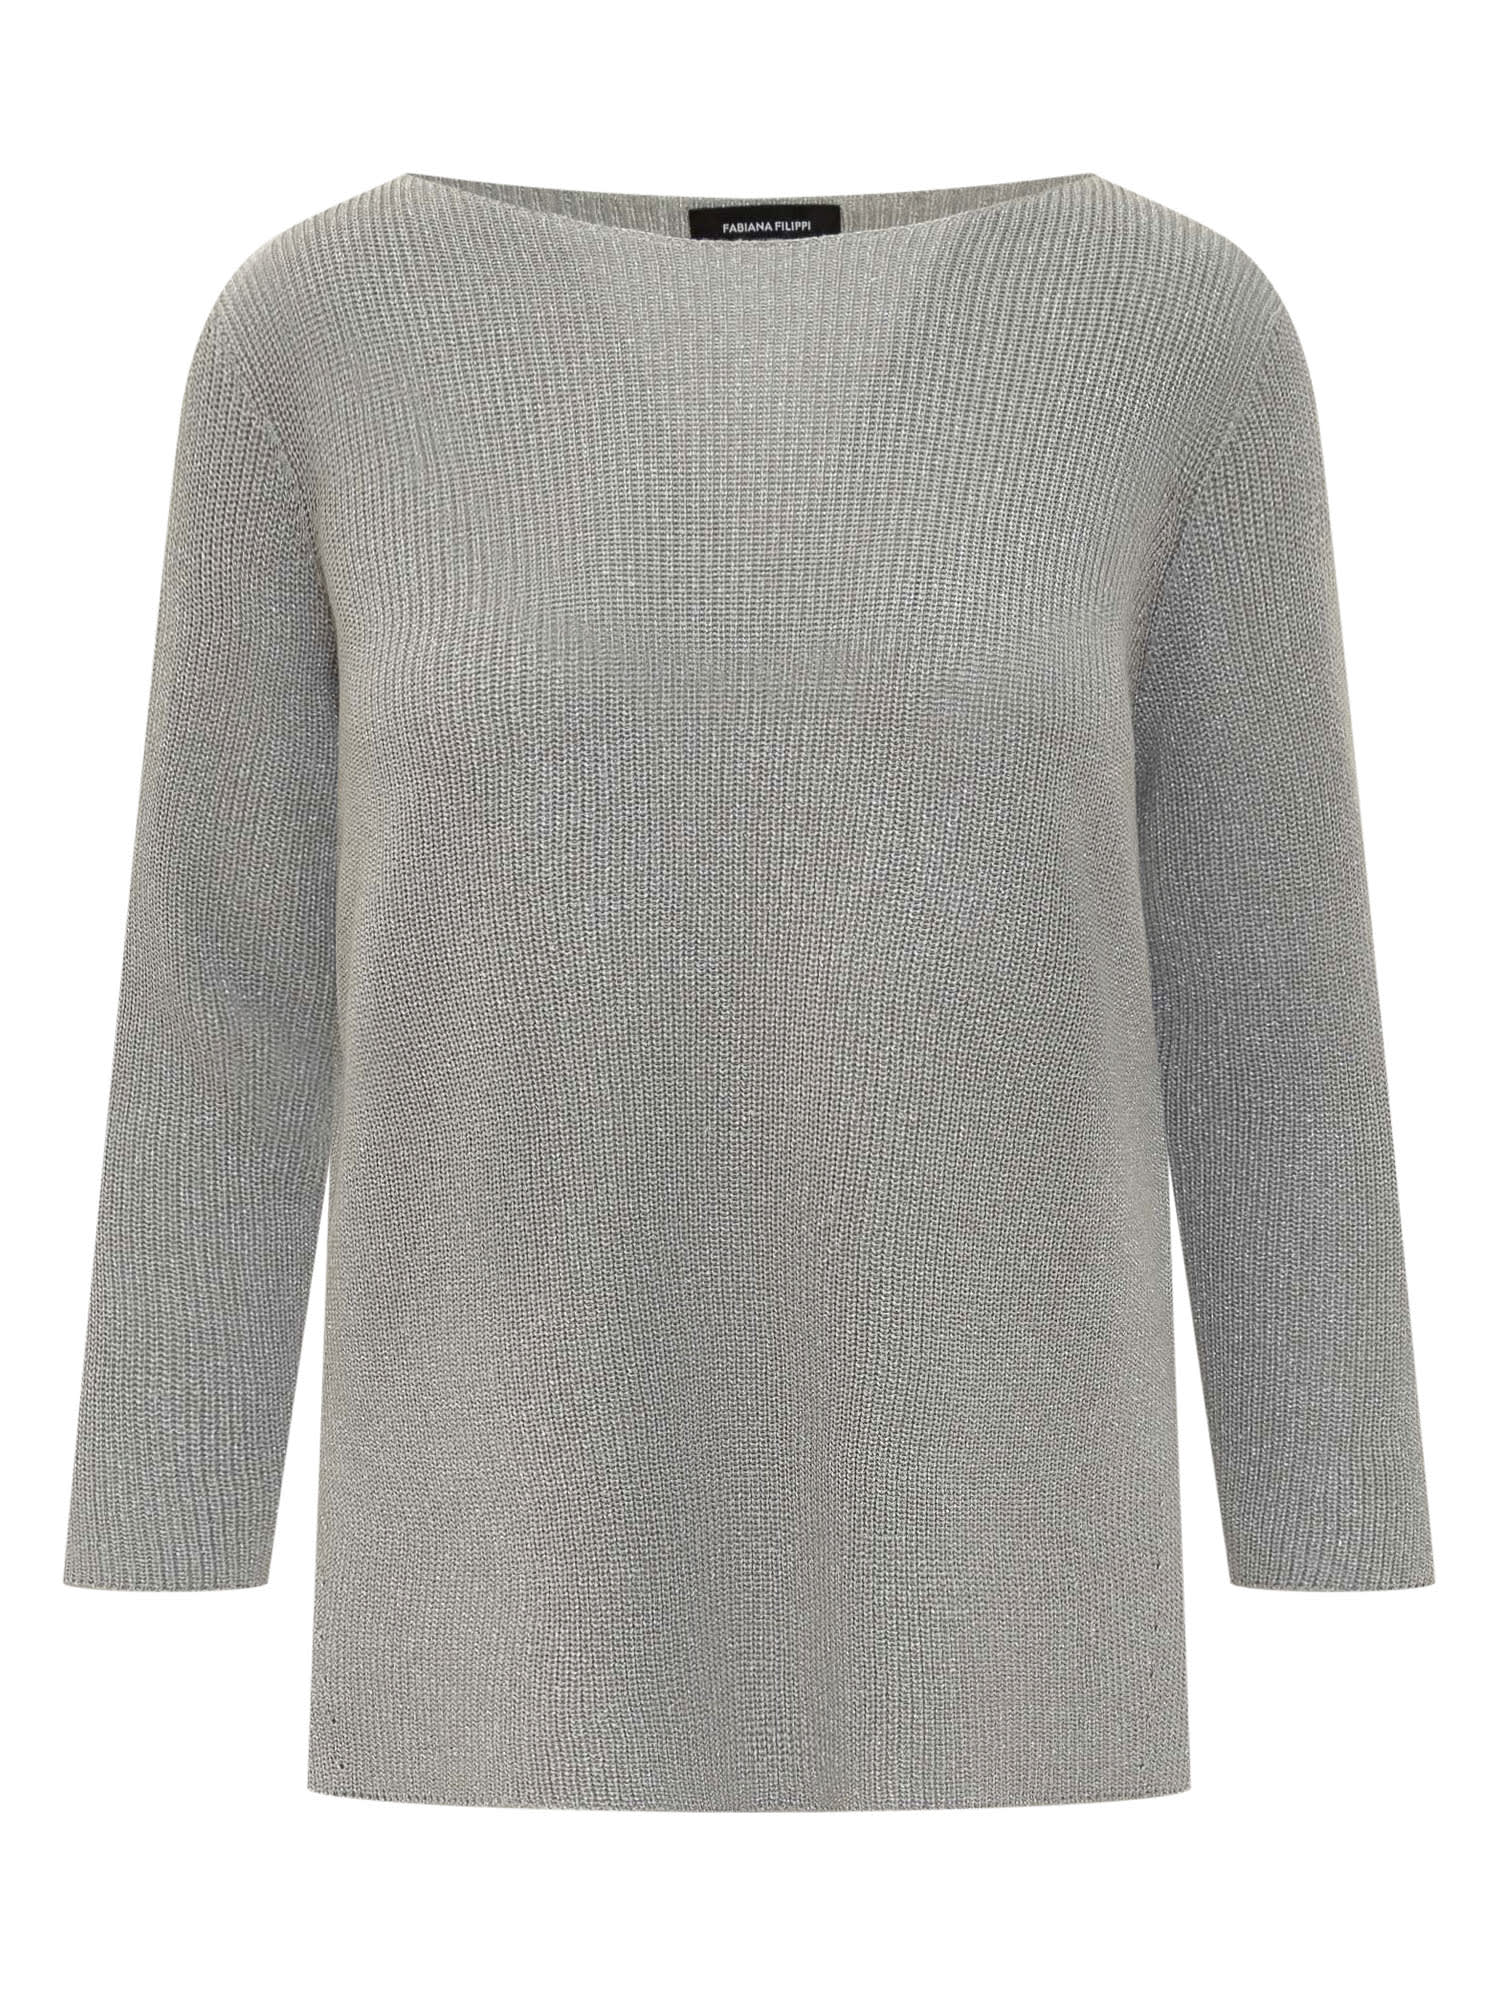 Shop Fabiana Filippi Sweater In Grey